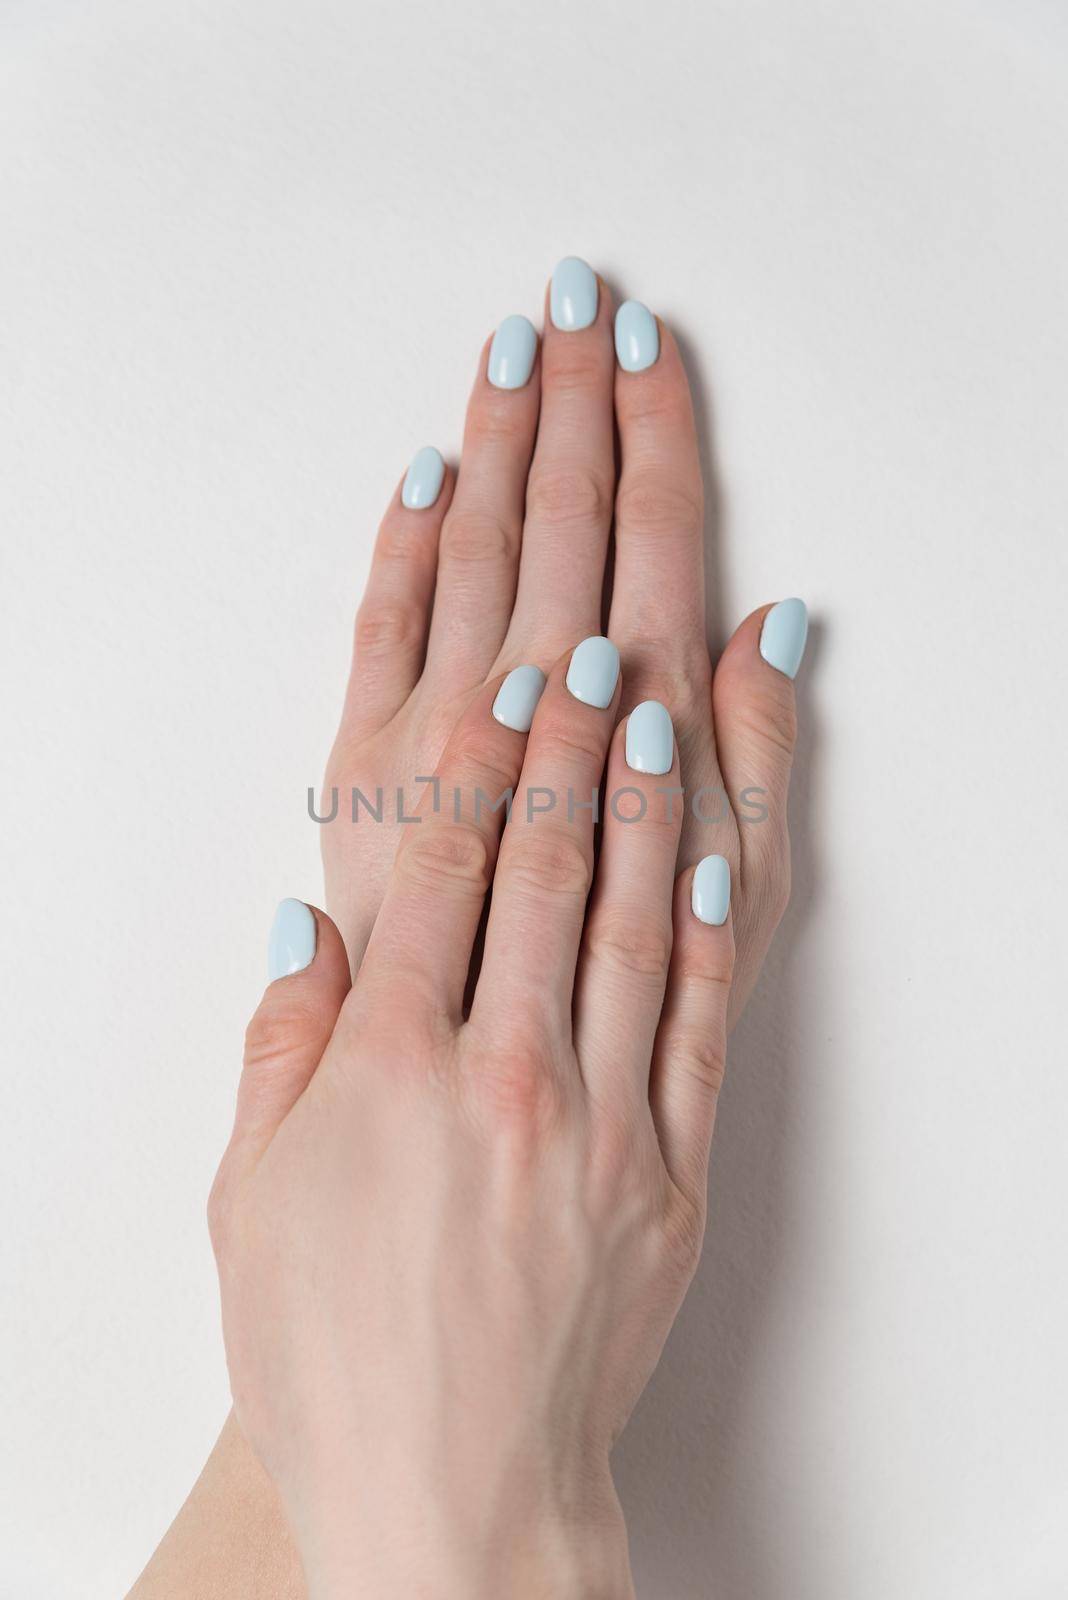 Gentle summer manicure, gel Polish. Female hands on white background. Verrical frame.